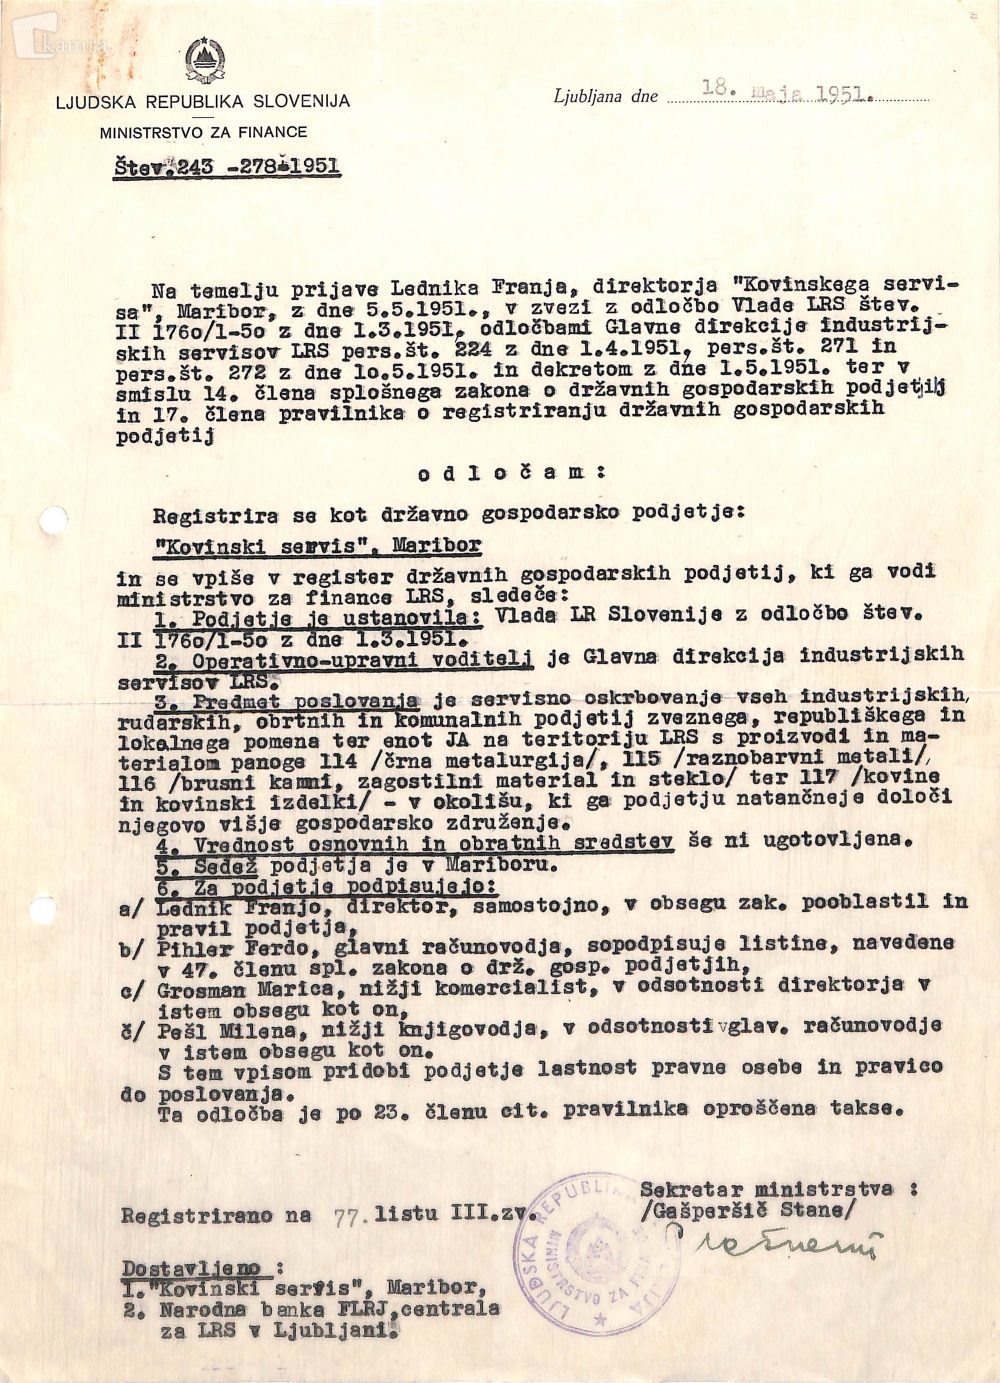 Odločba o registraciji podjetja Kovinski servis Maribor, 18. 5. 1951